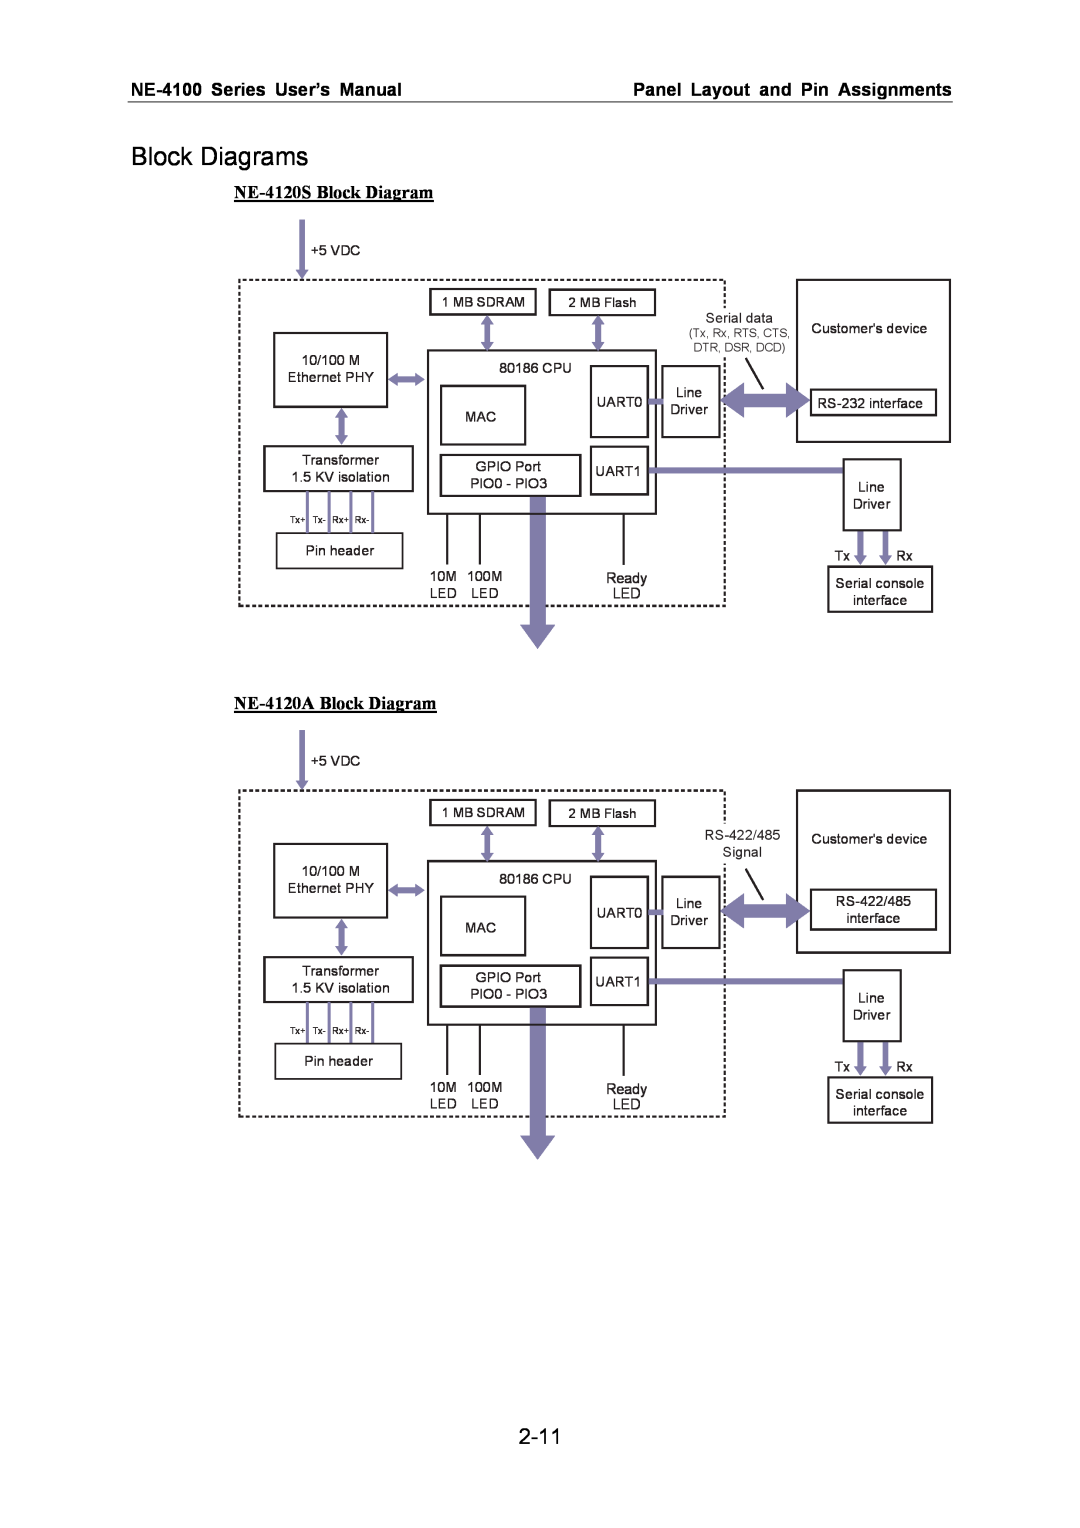 Moxa Technologies user manual 2-11, Block Diagrams, NE-4100 Series User’s Manual, Panel Layout and Pin Assignments 